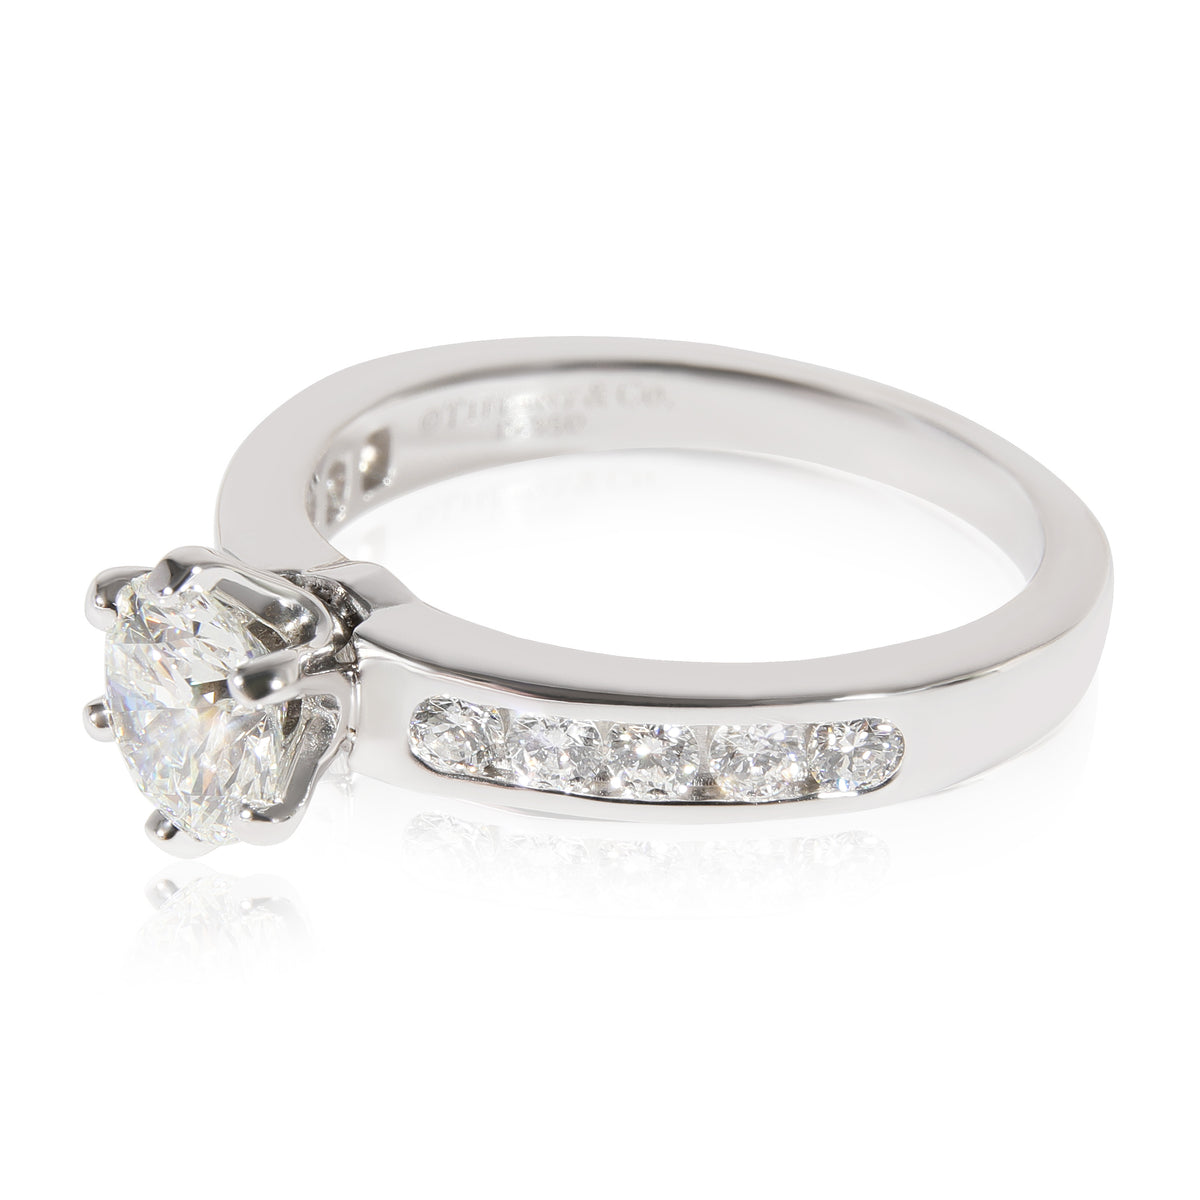 Tiffany & Co. Diamond Engagement Ring in Platinum 0.81 CTW